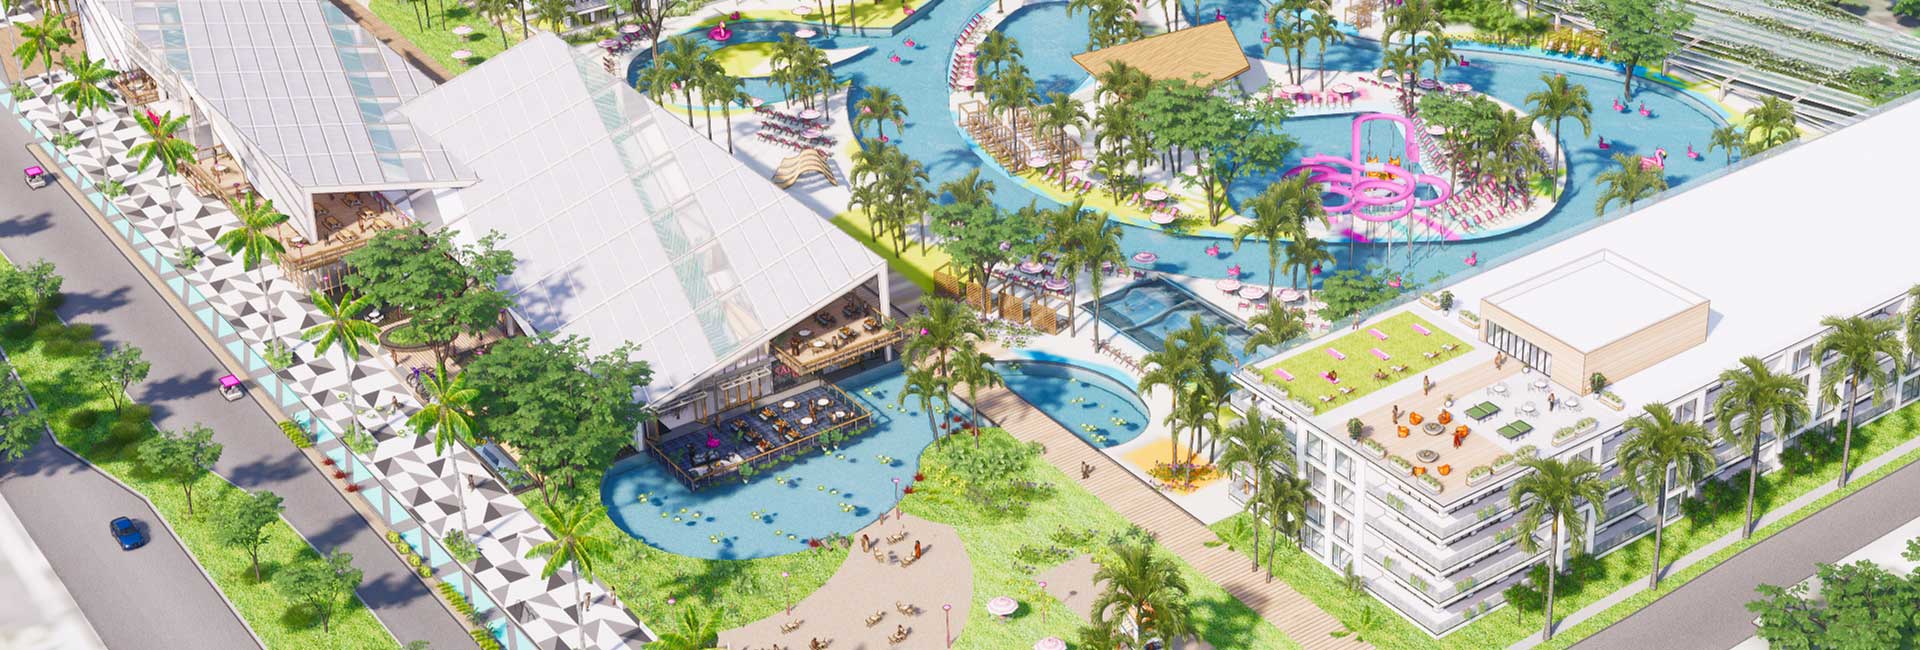 Learn More About CABANA Resort Development | CABANA Resort & Spa of Bonita Springs, Florida